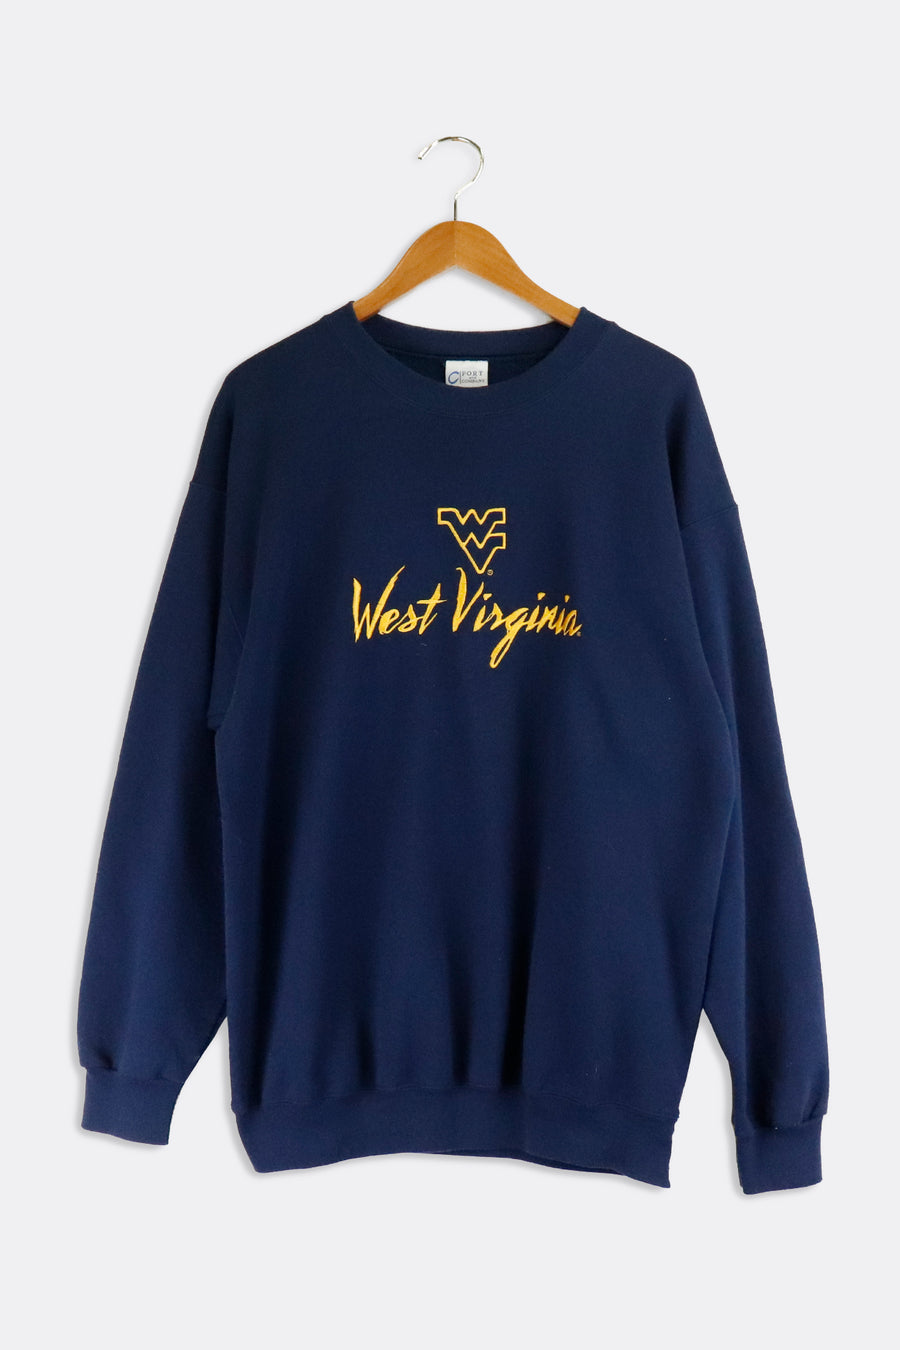 Vintage WV West Virginia Yellow Embroidered Lettering Sweatshirt